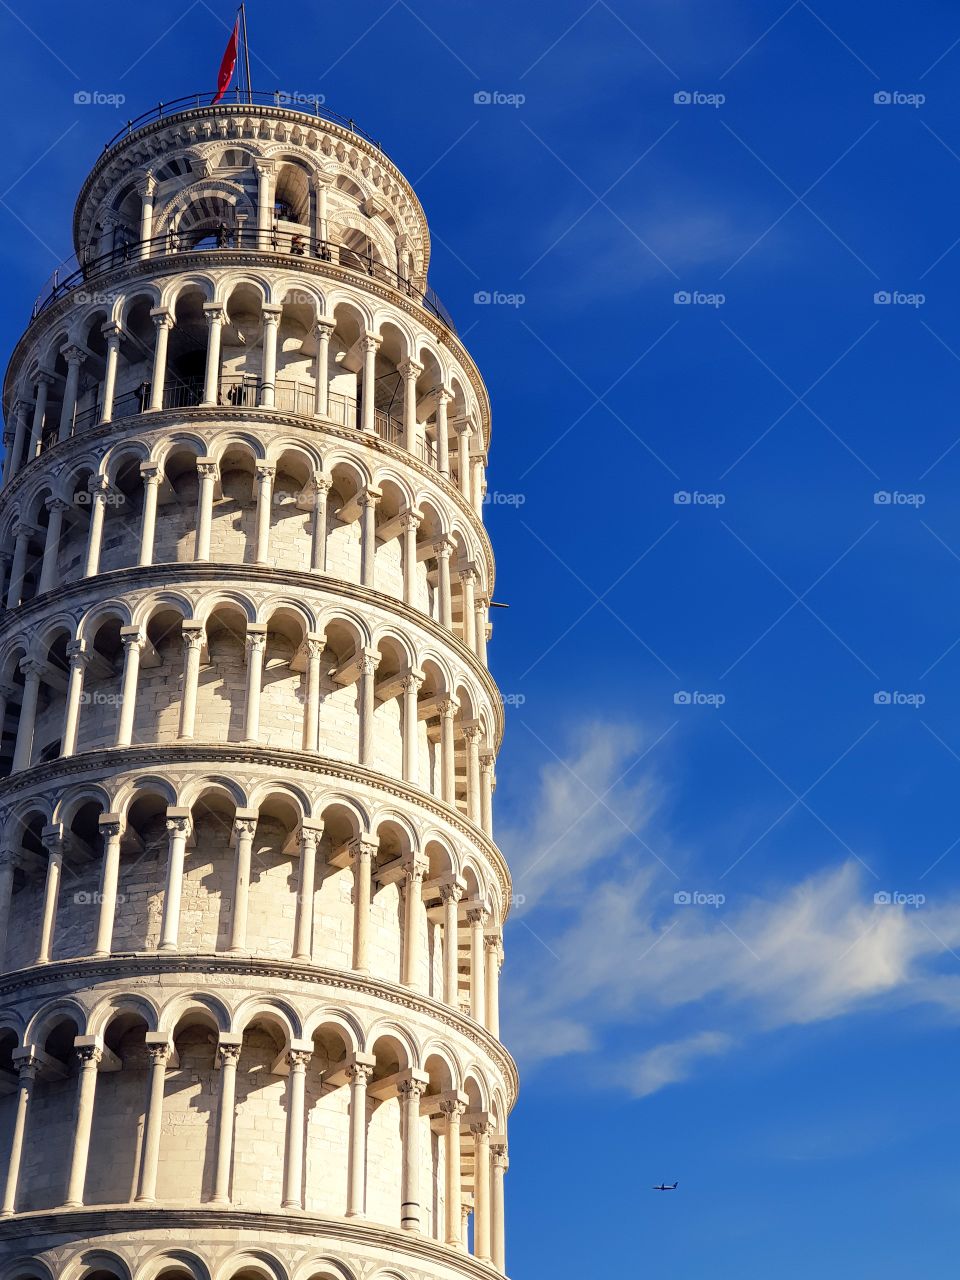 Pisa tower ❤